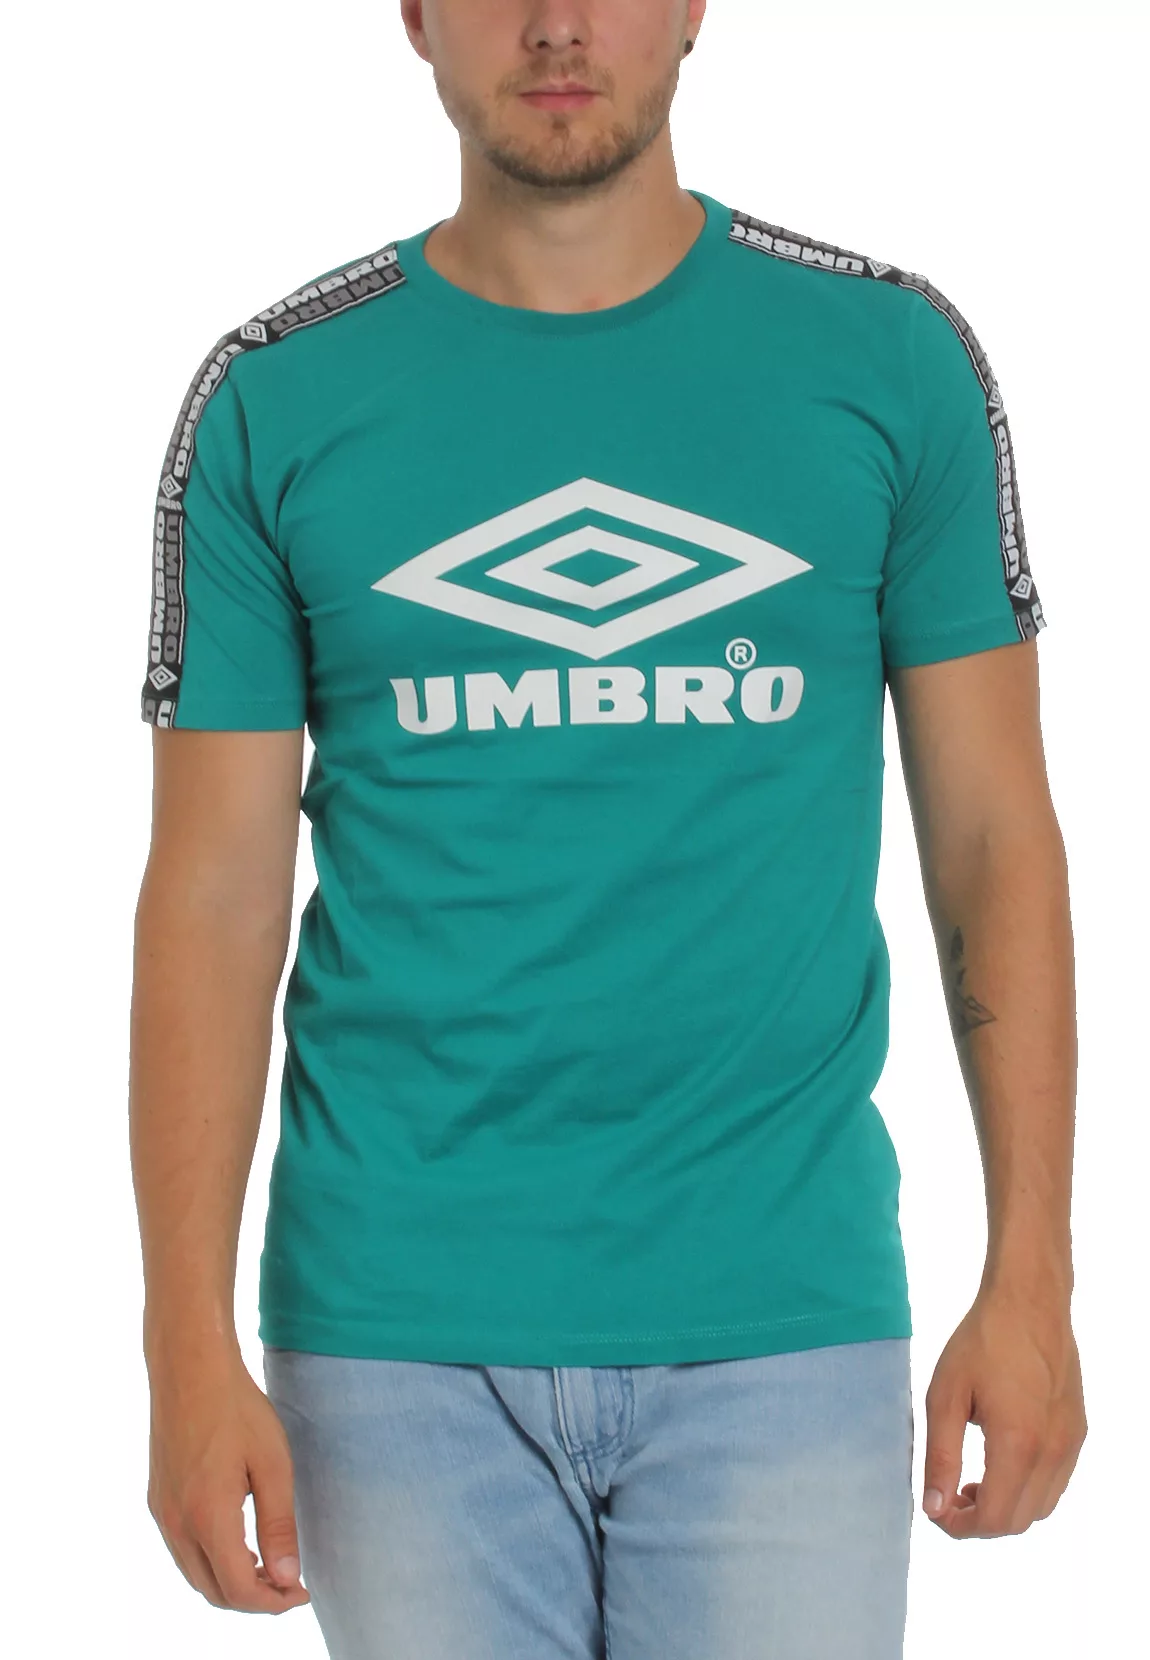 Umbro T-Shirt Herren TAPED CREW TEE UMTM0234 PA1 Türkis Parasail günstig online kaufen